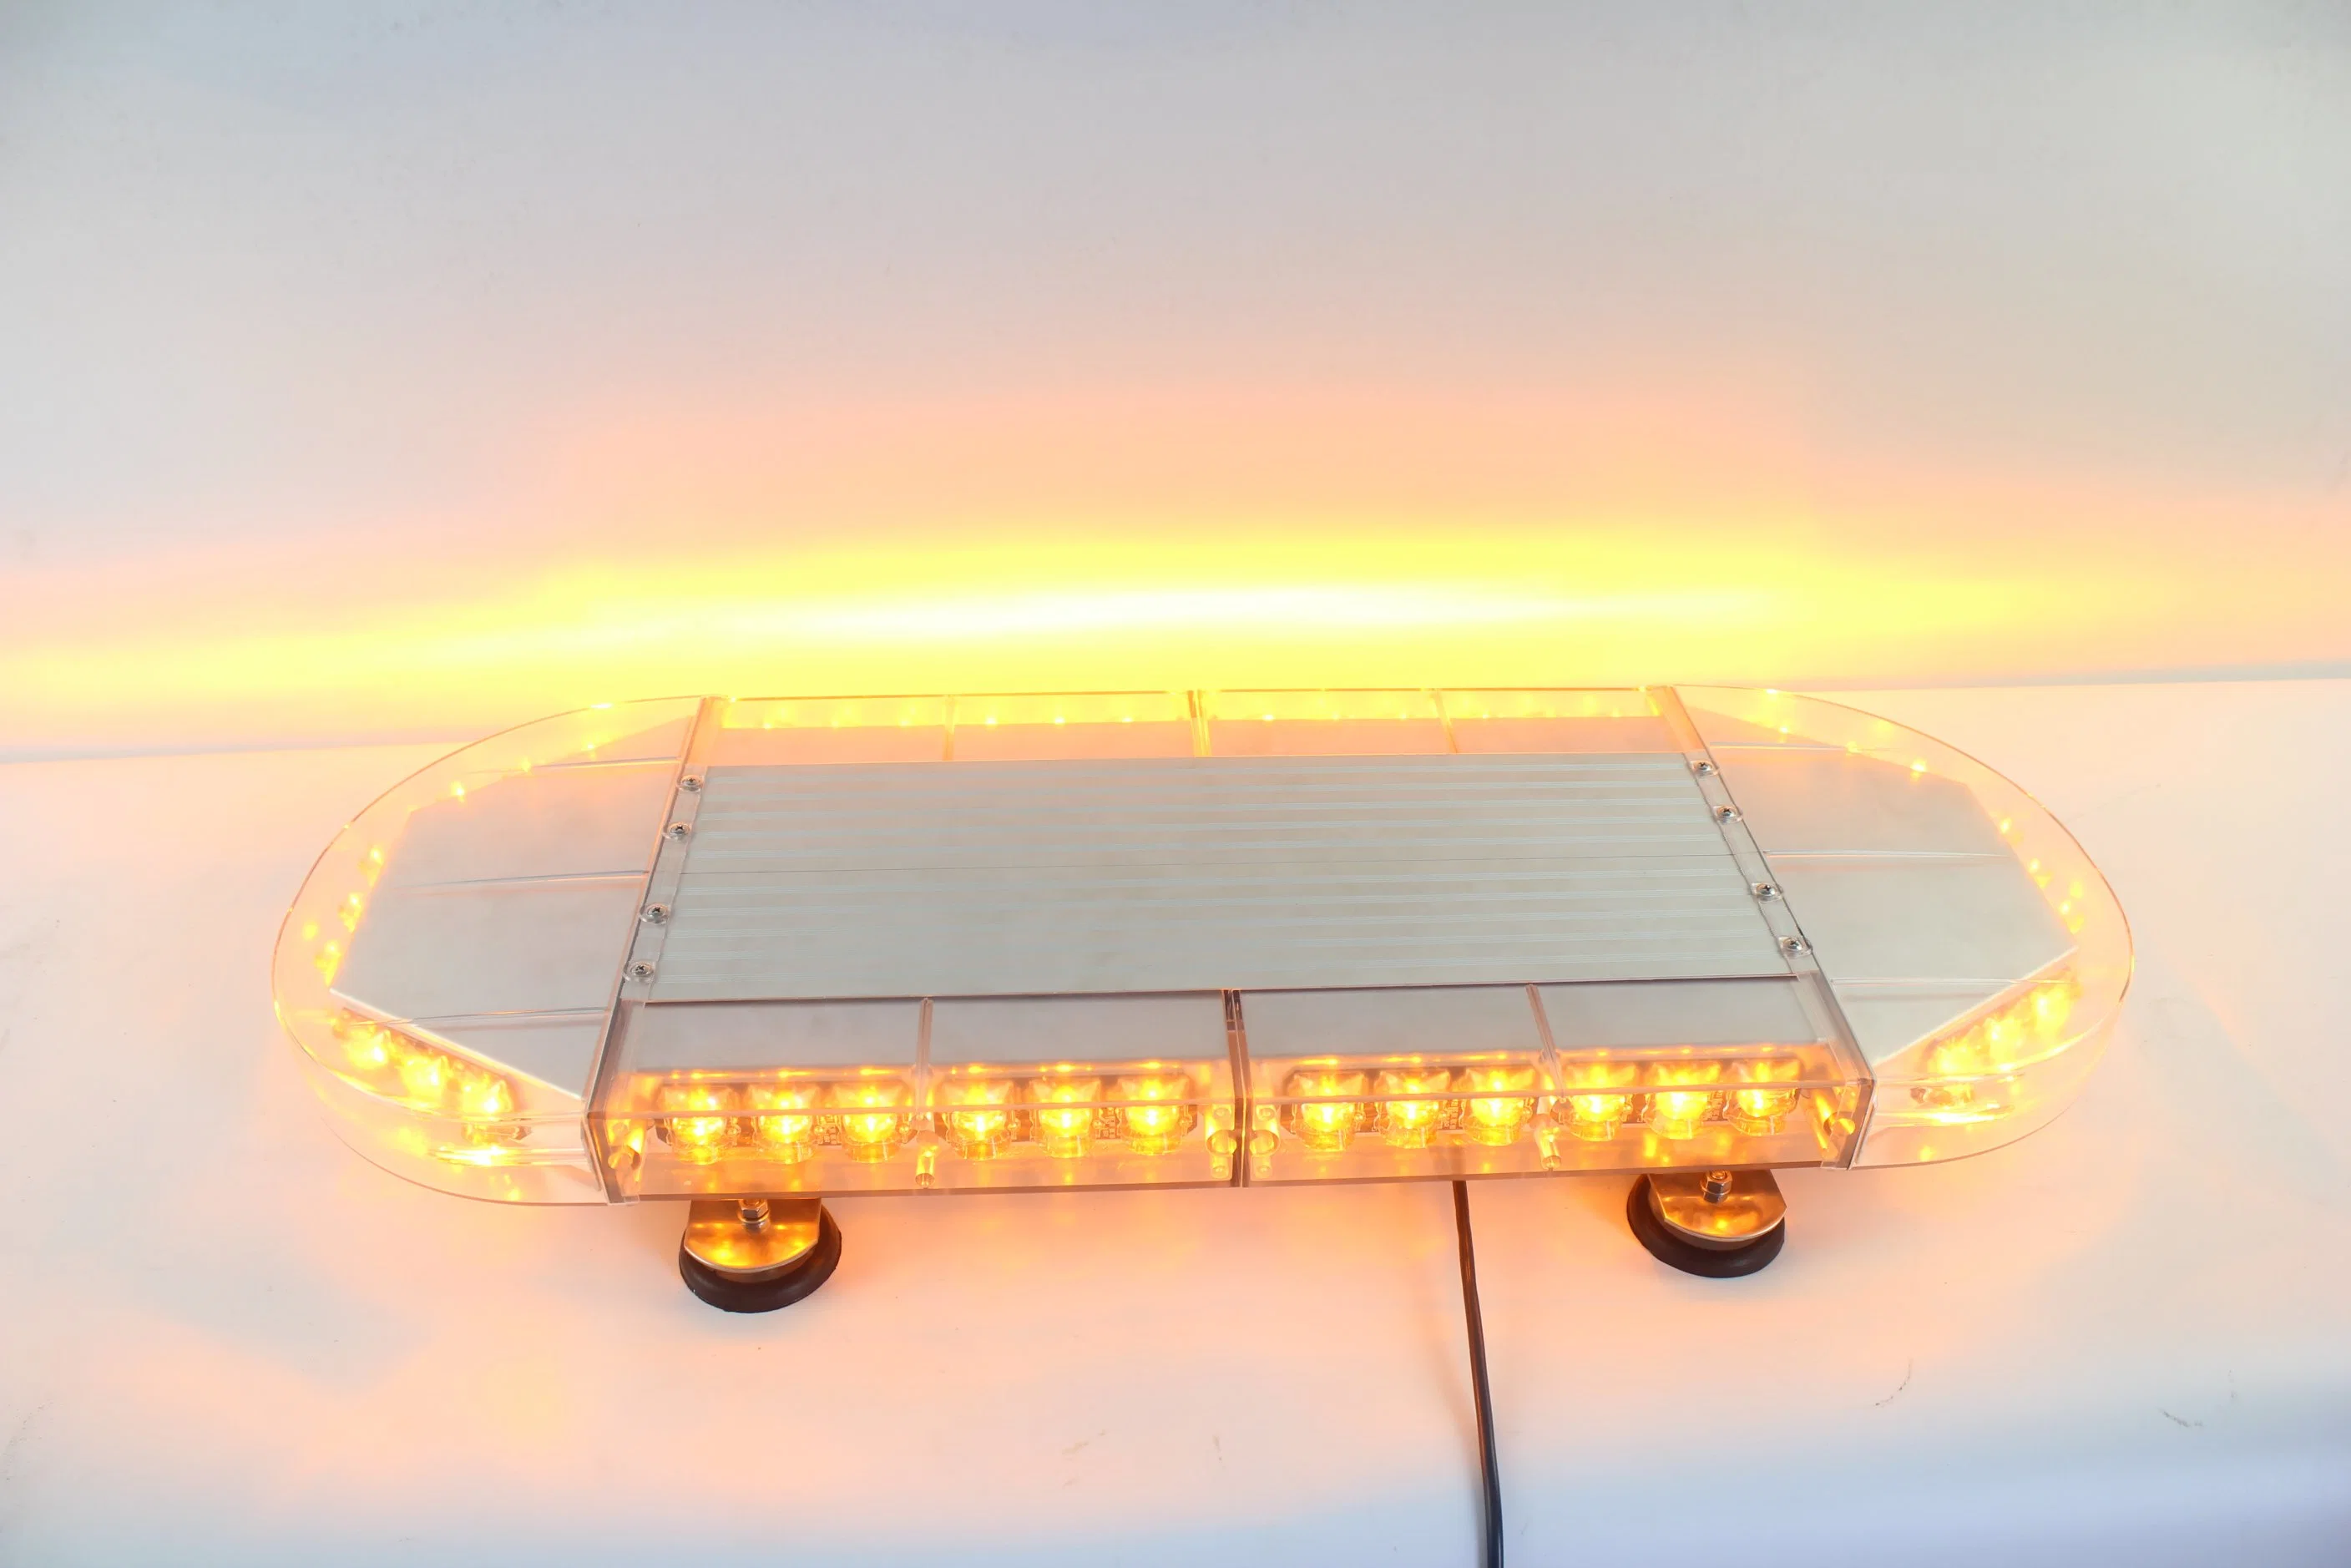 Haibang LED Car Truck Emergency Beacon Light Bar Hazard Strobe Warning Lamp Amber